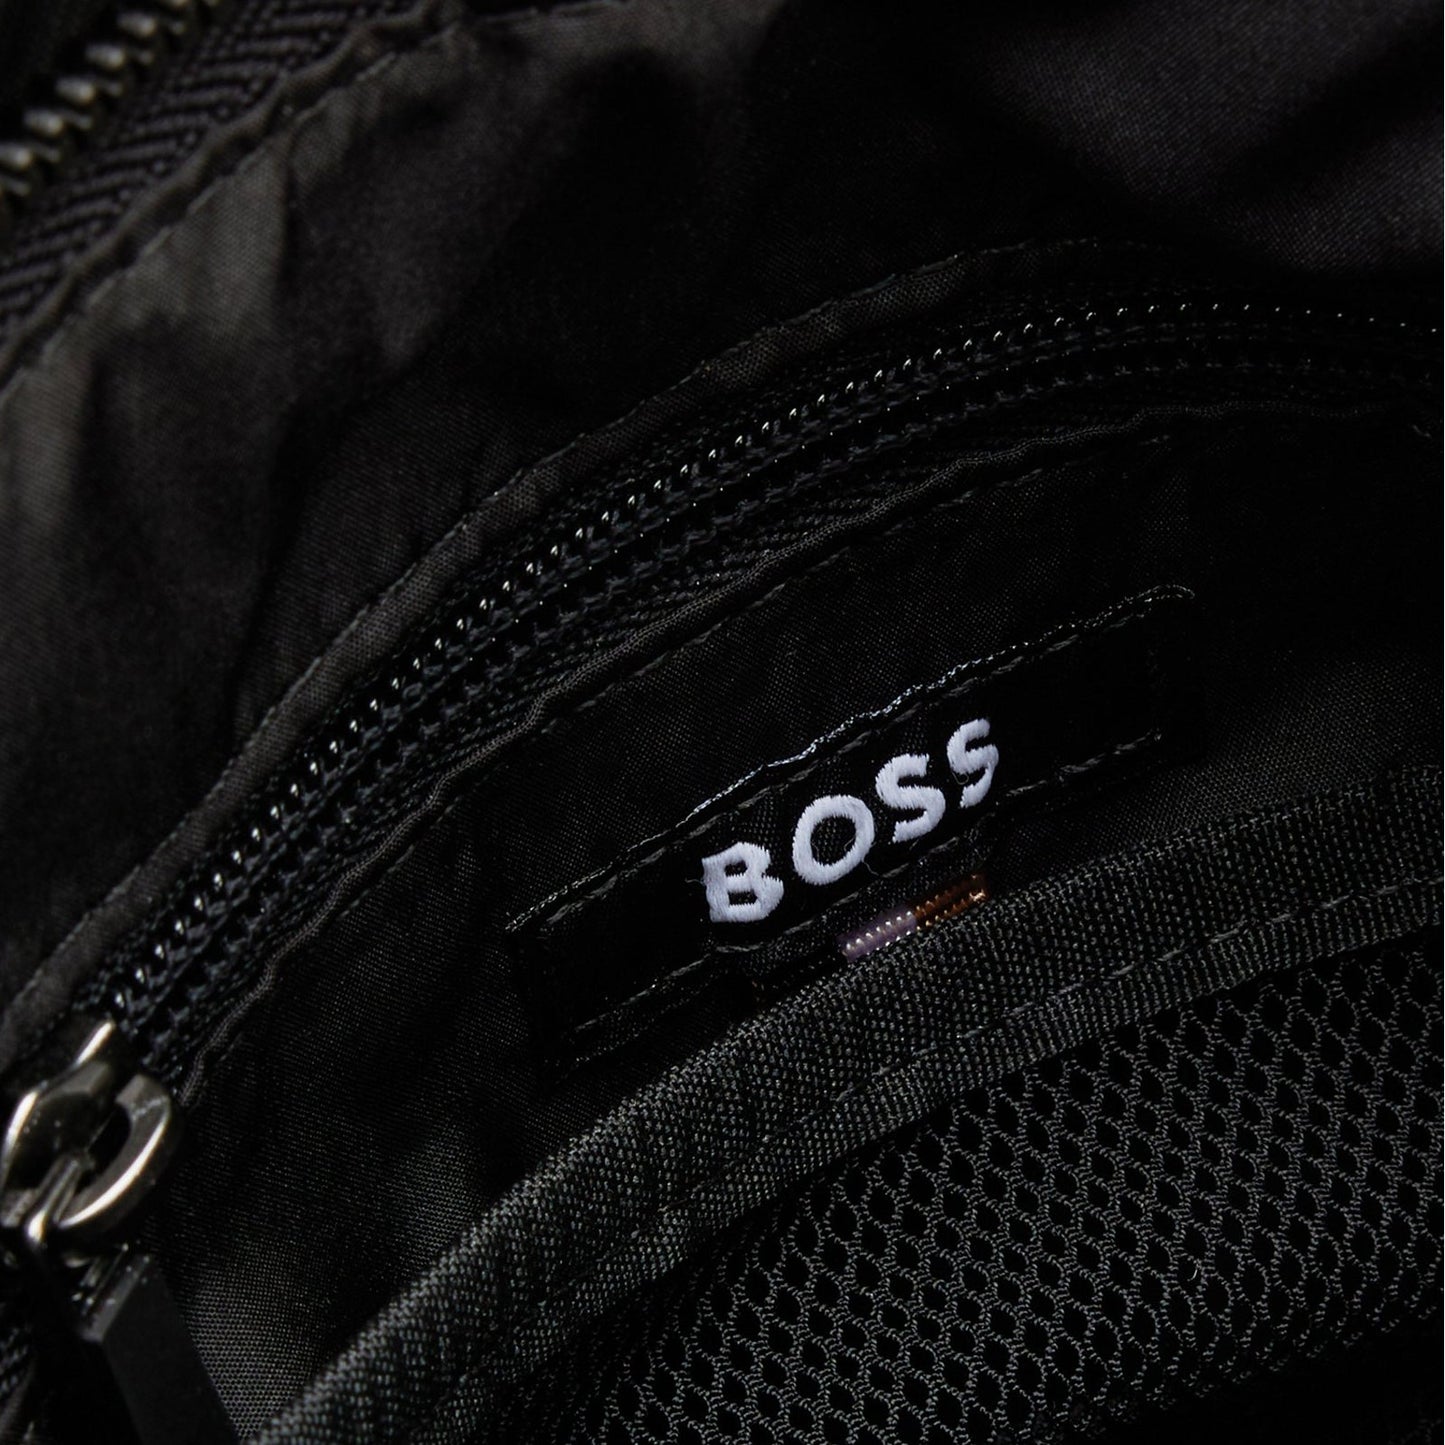 Boss Black 50490970 Crossbody Bag Catch 2.0 - 001 Black - Escape Menswear